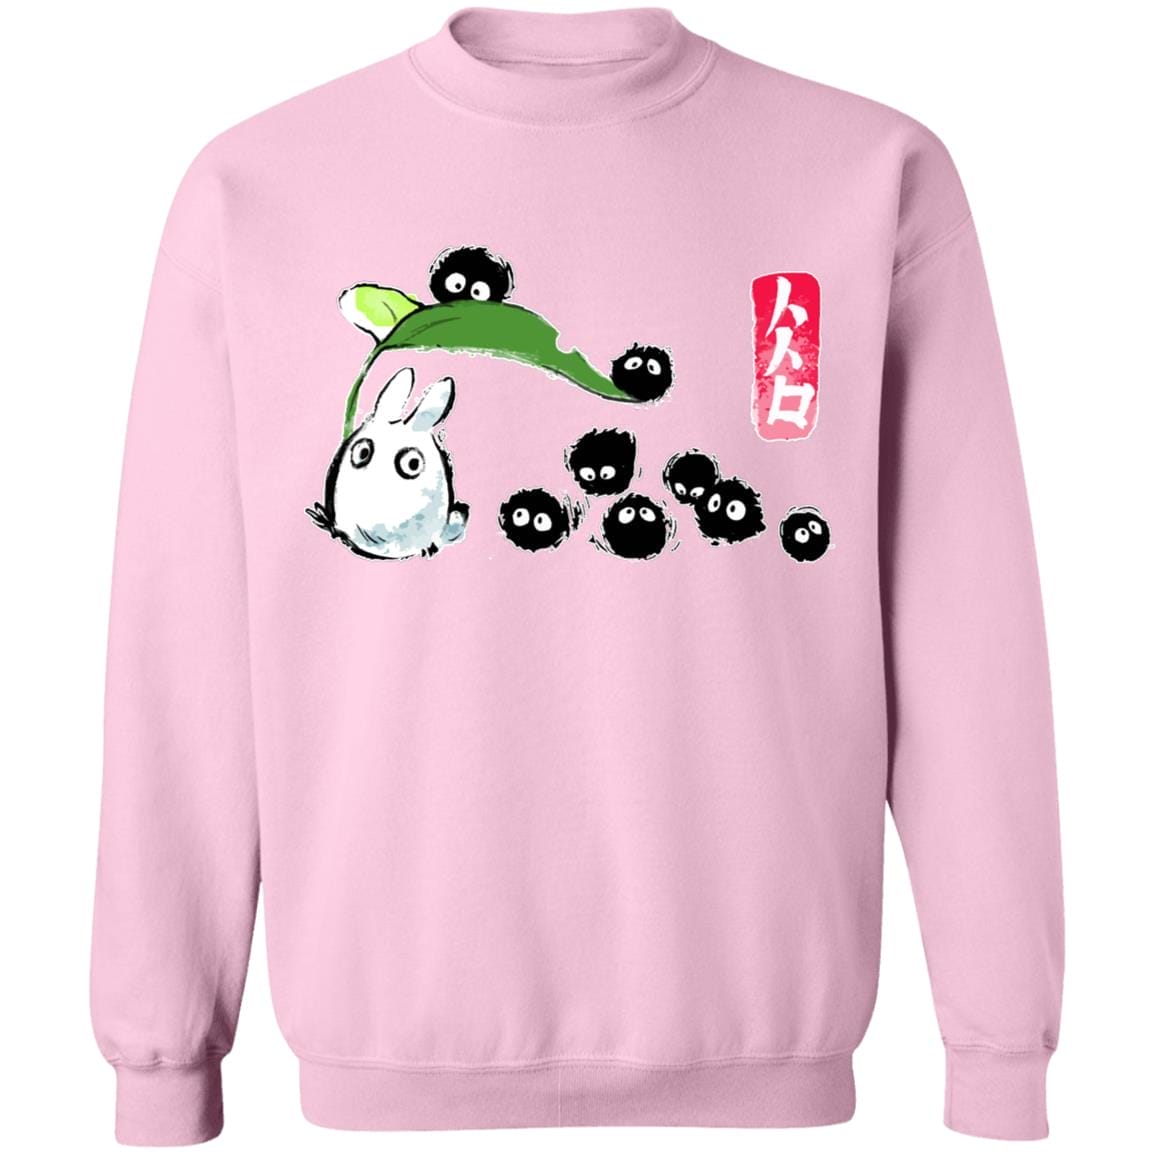 Mini Totoro and the Soot Balls Sweatshirt